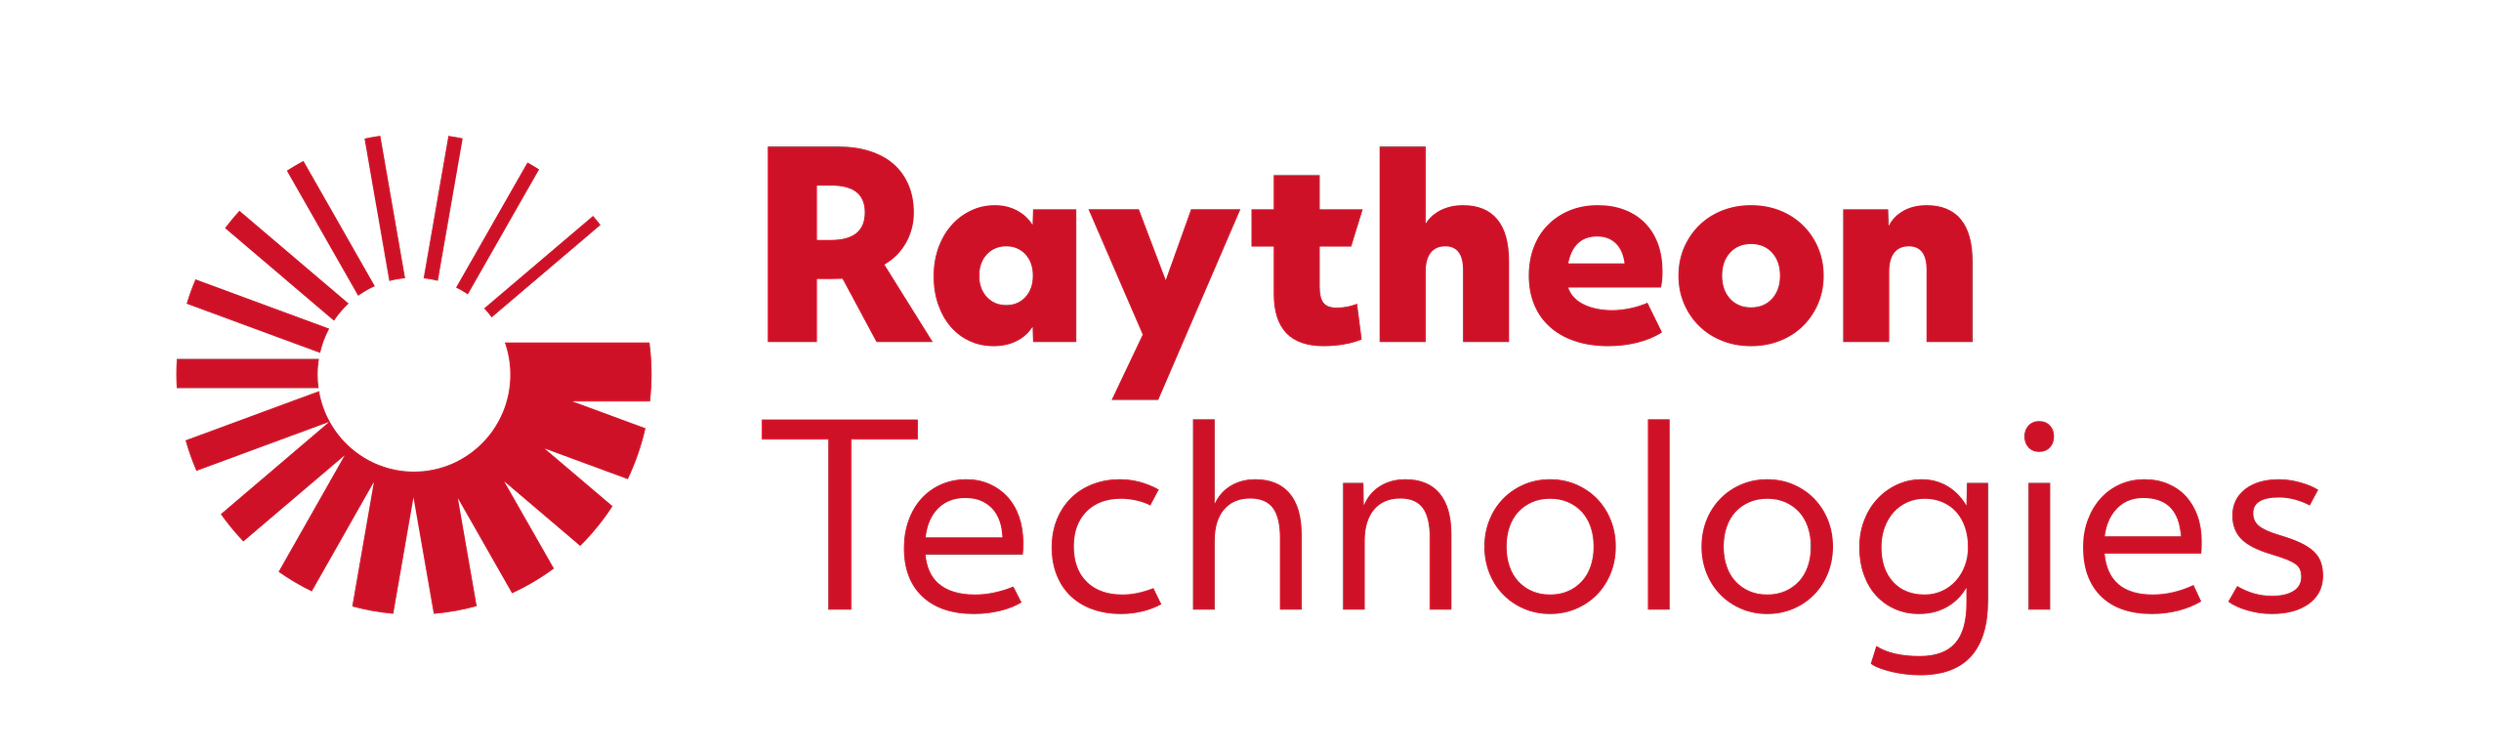 MACH37 Mentor Raytheon Technologies logo.png